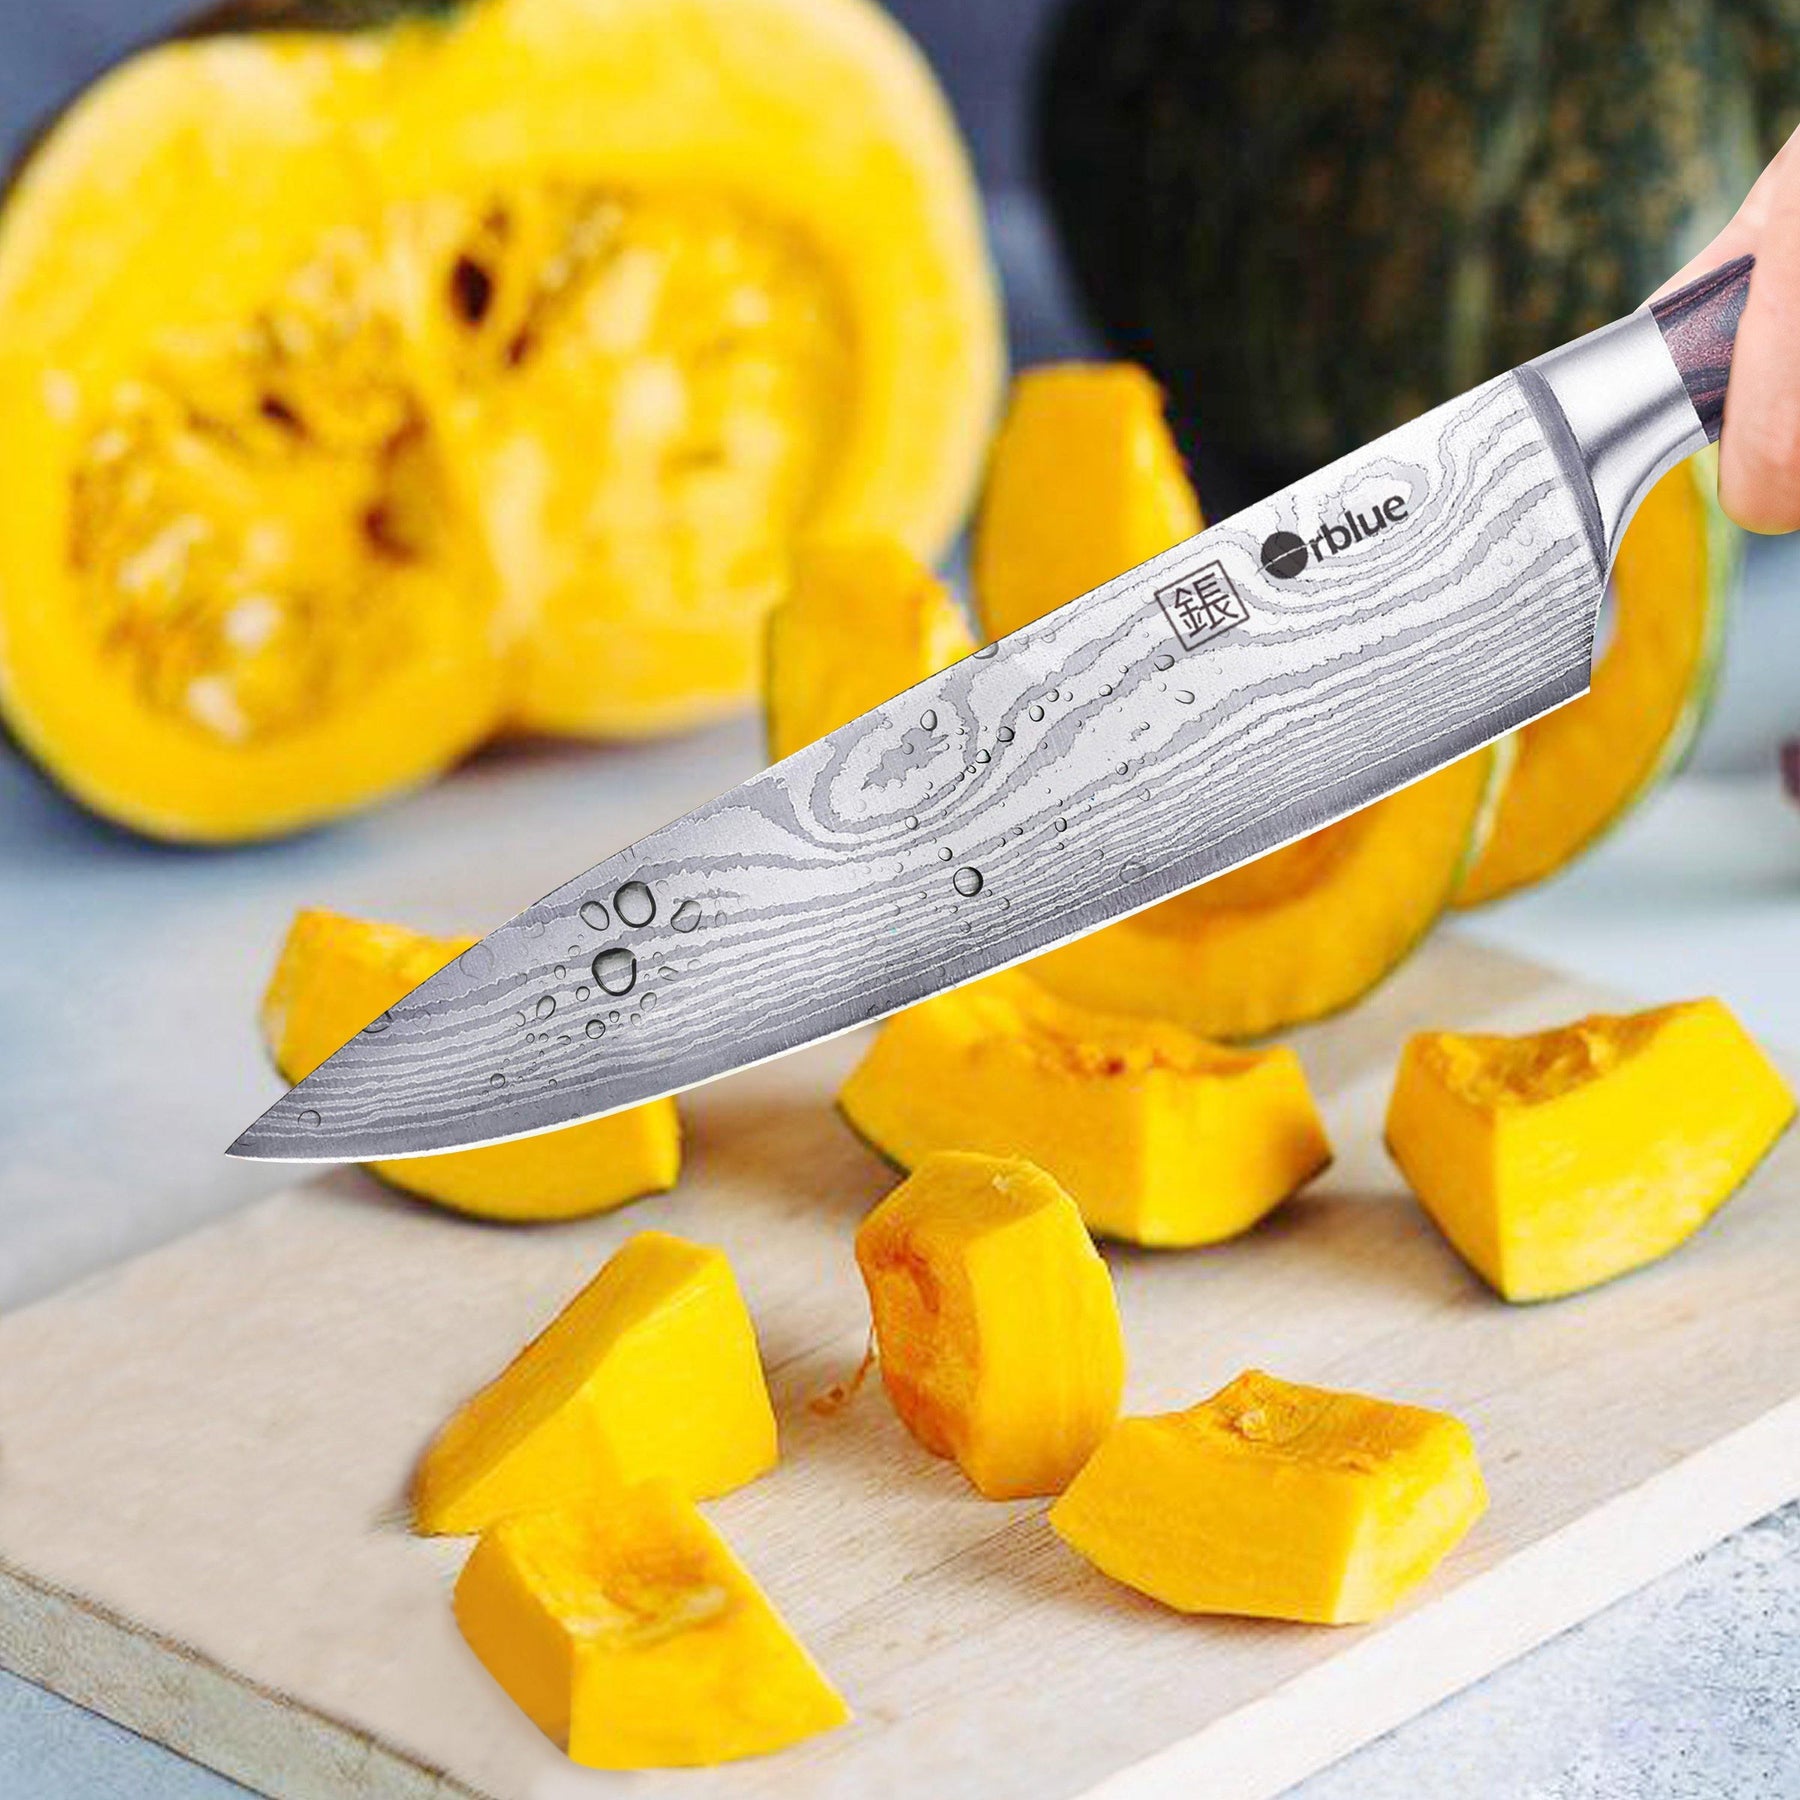 Linoroso 8 inch Chef Knife - METEORITE Series